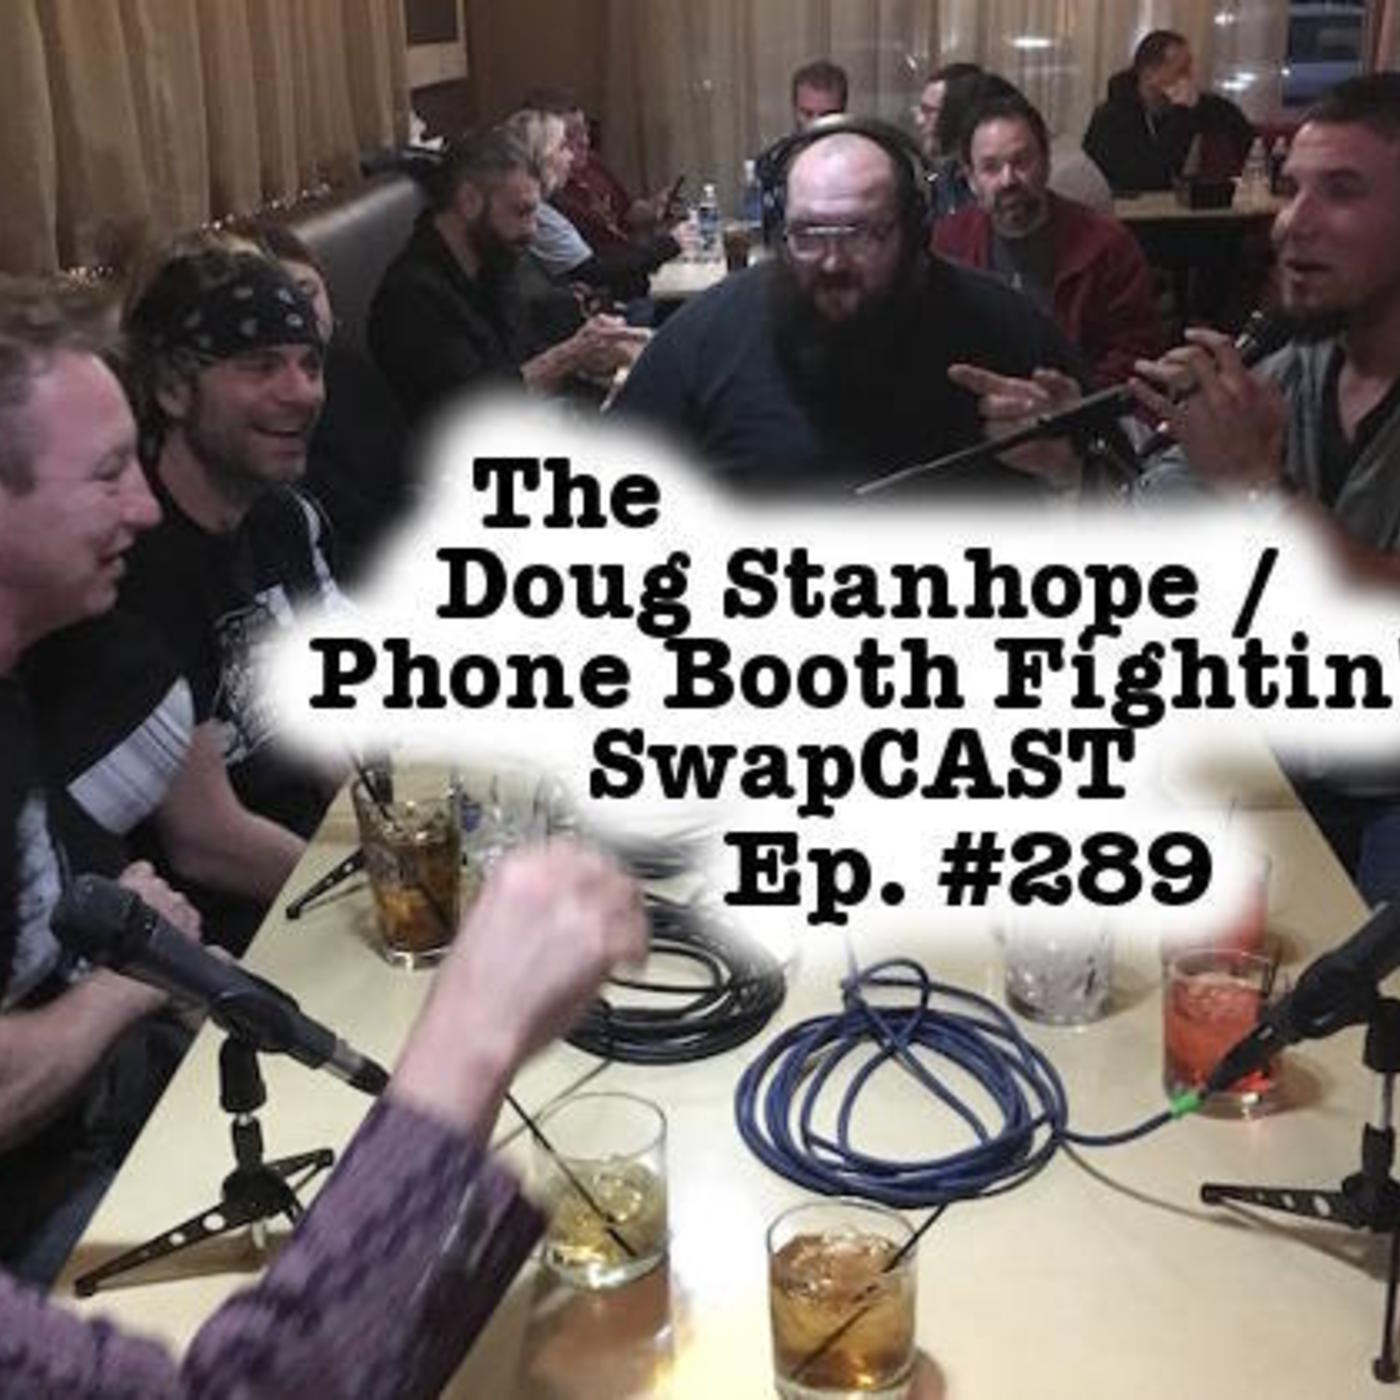 Ep. #289: Phone Booth Fightin’ SwapCast in Vegas